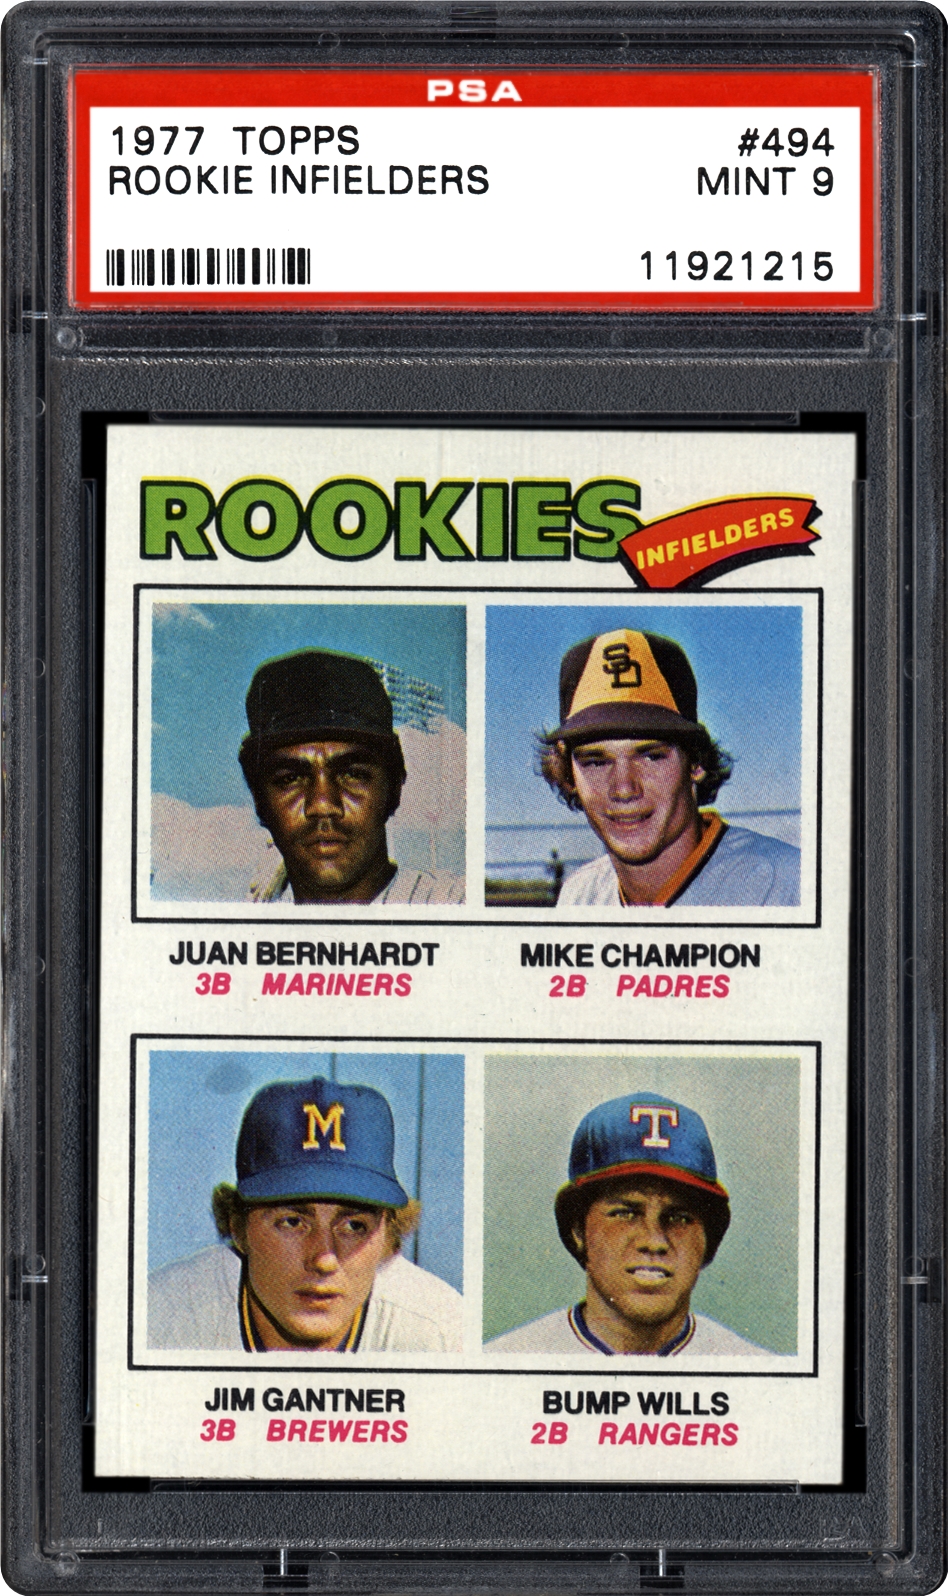 1977 Topps Rookie Infielders (Juan Bernhardt/Mike Champion/Jim